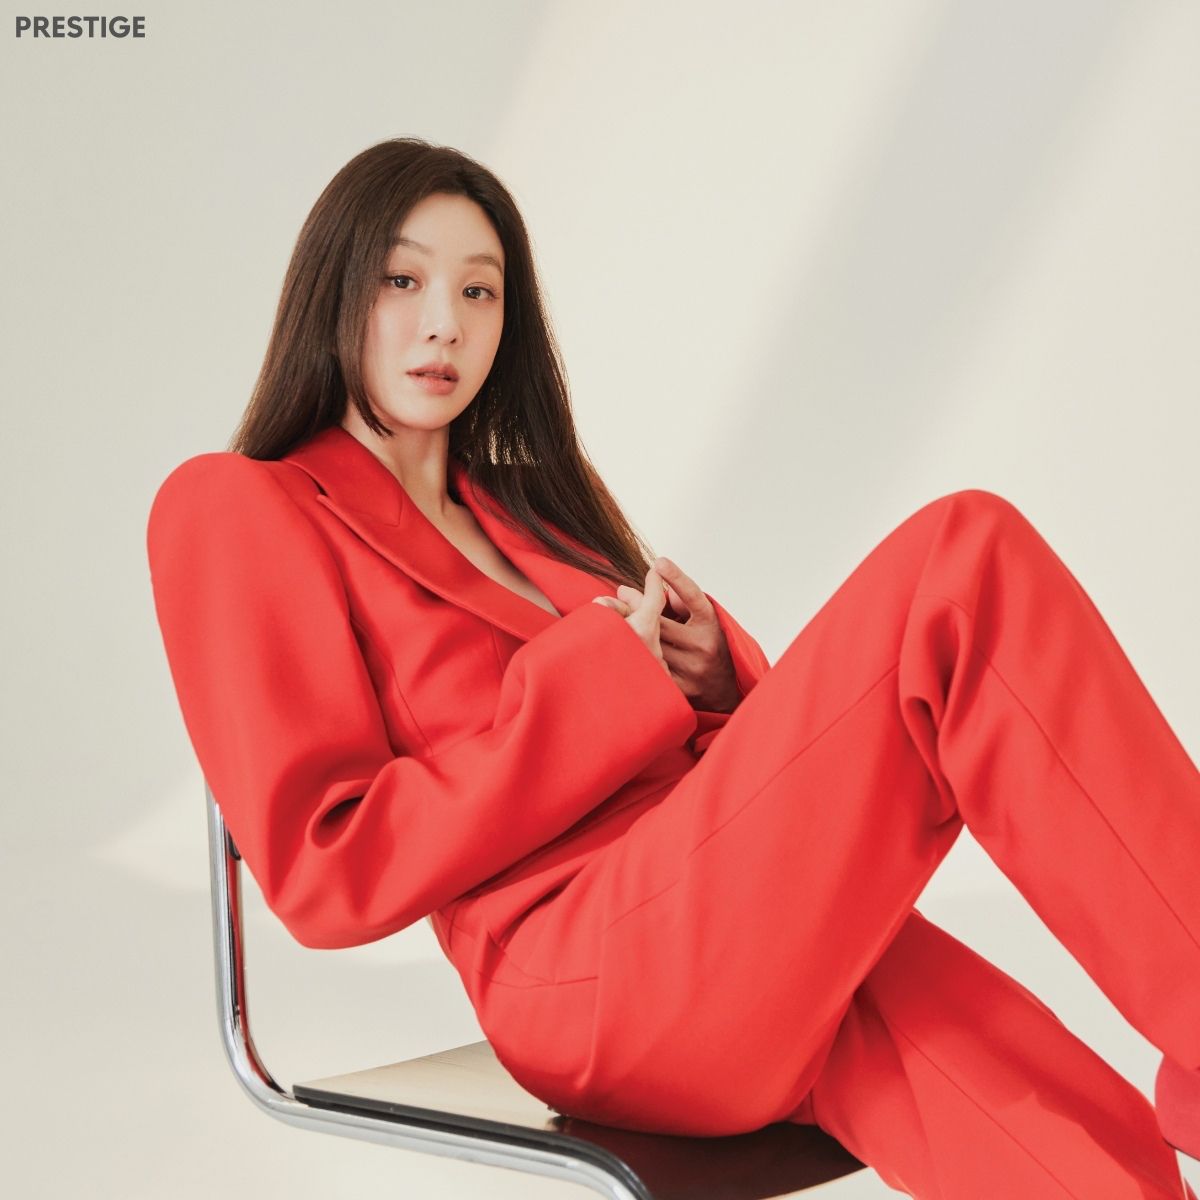 Prestige HK June cover Jung Ryeo-won